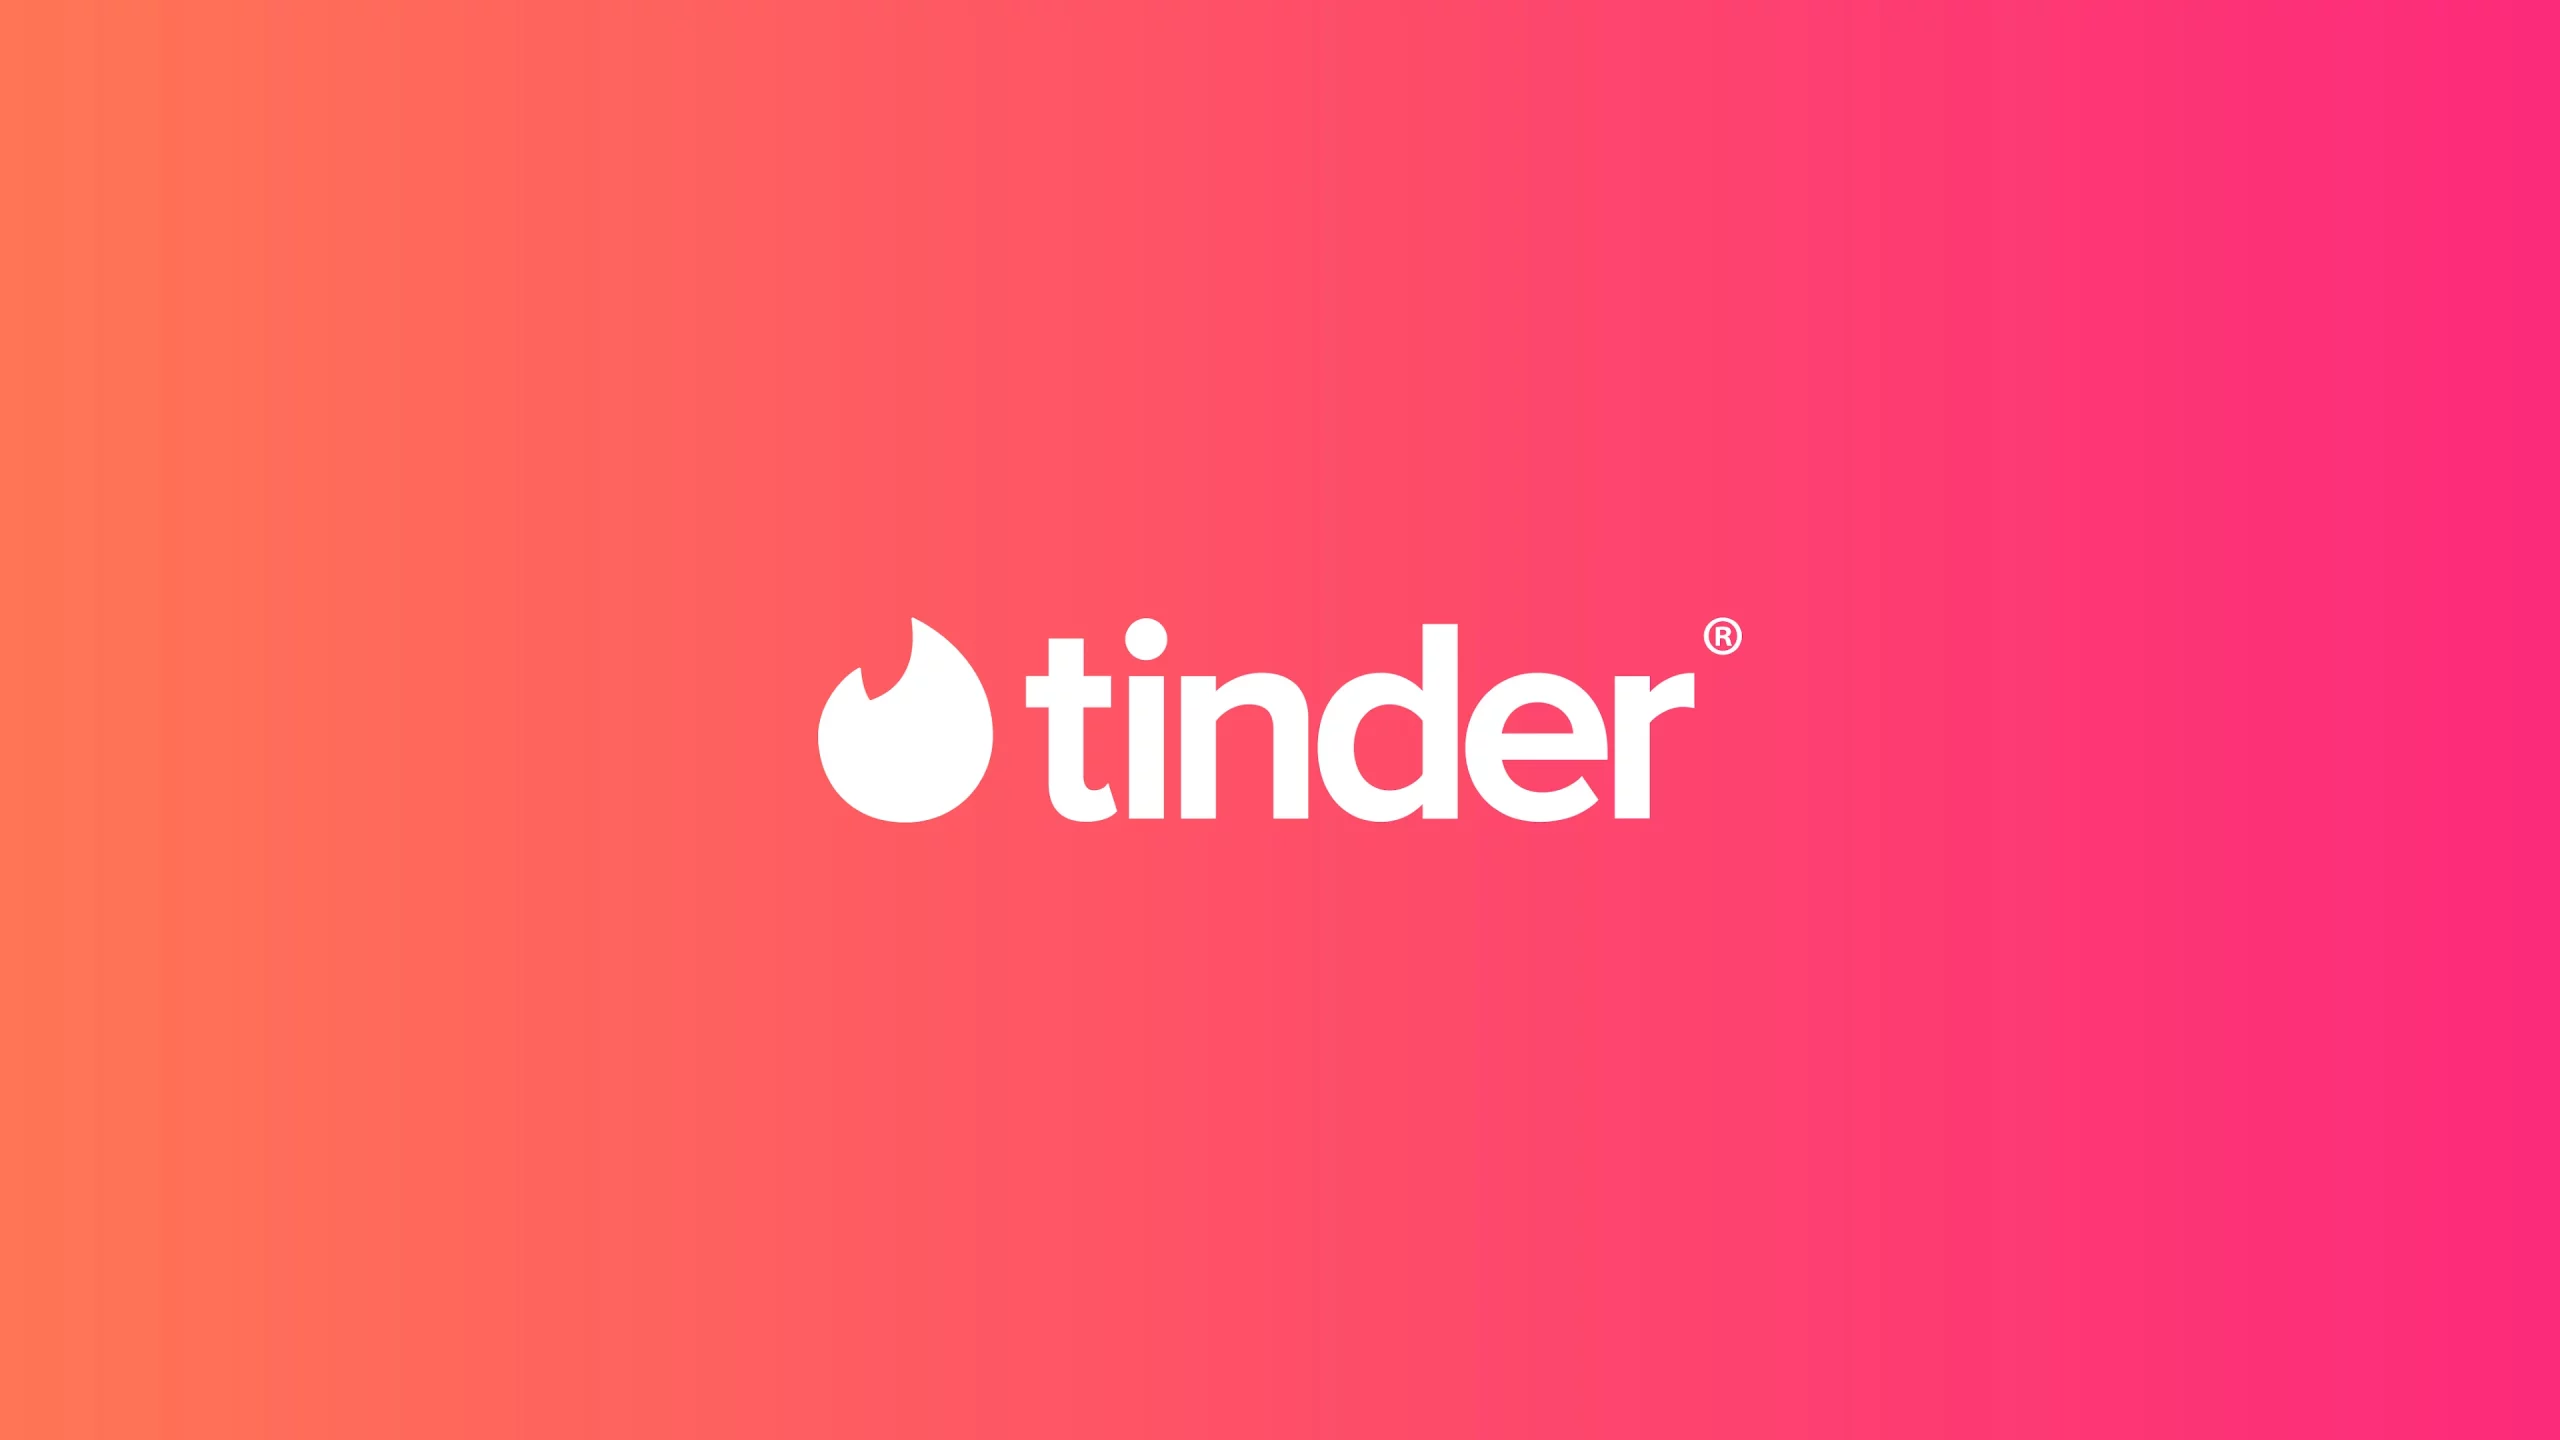 Tinder Web and App